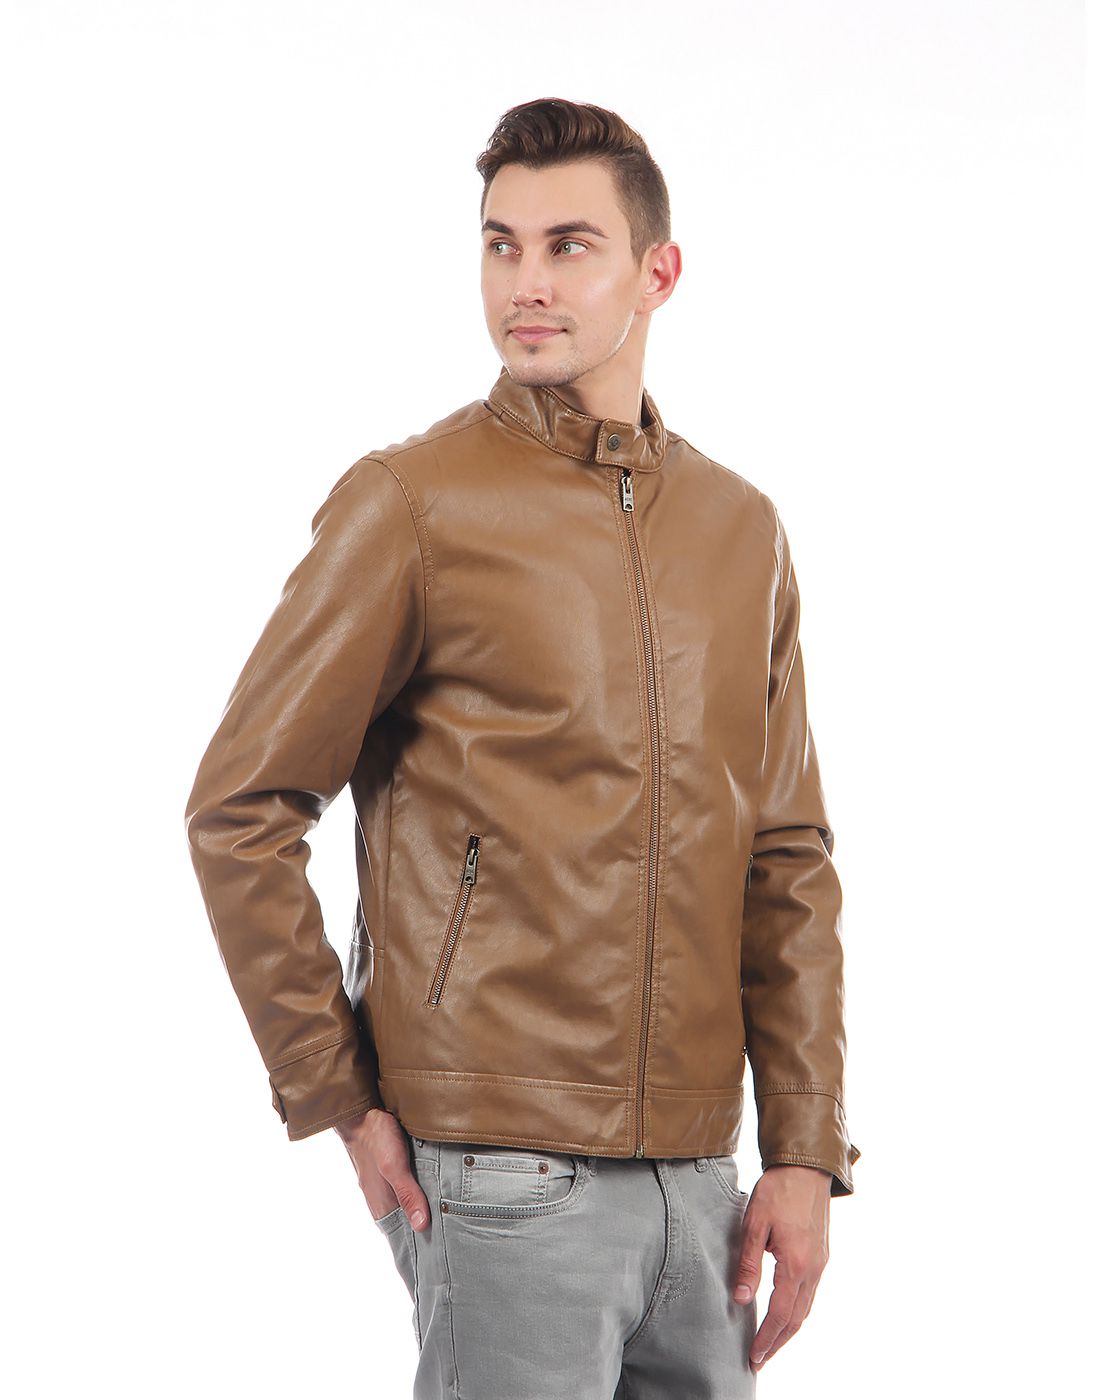 Aeropostale Brown Leather Jacket - Buy Aeropostale Brown Leather Jacket ...